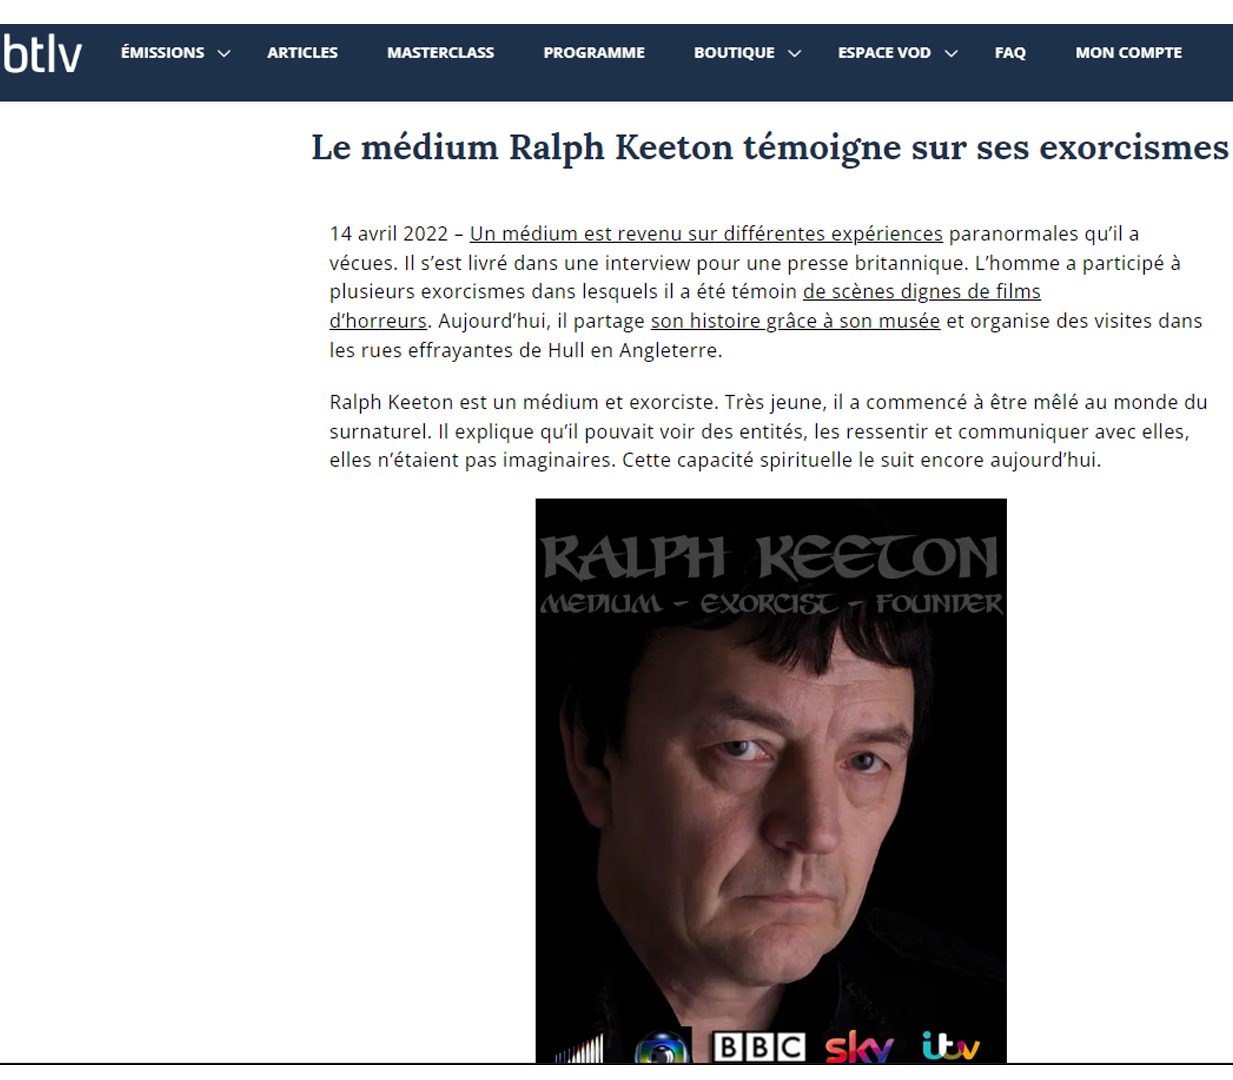 ralph keeton exorcist and medium